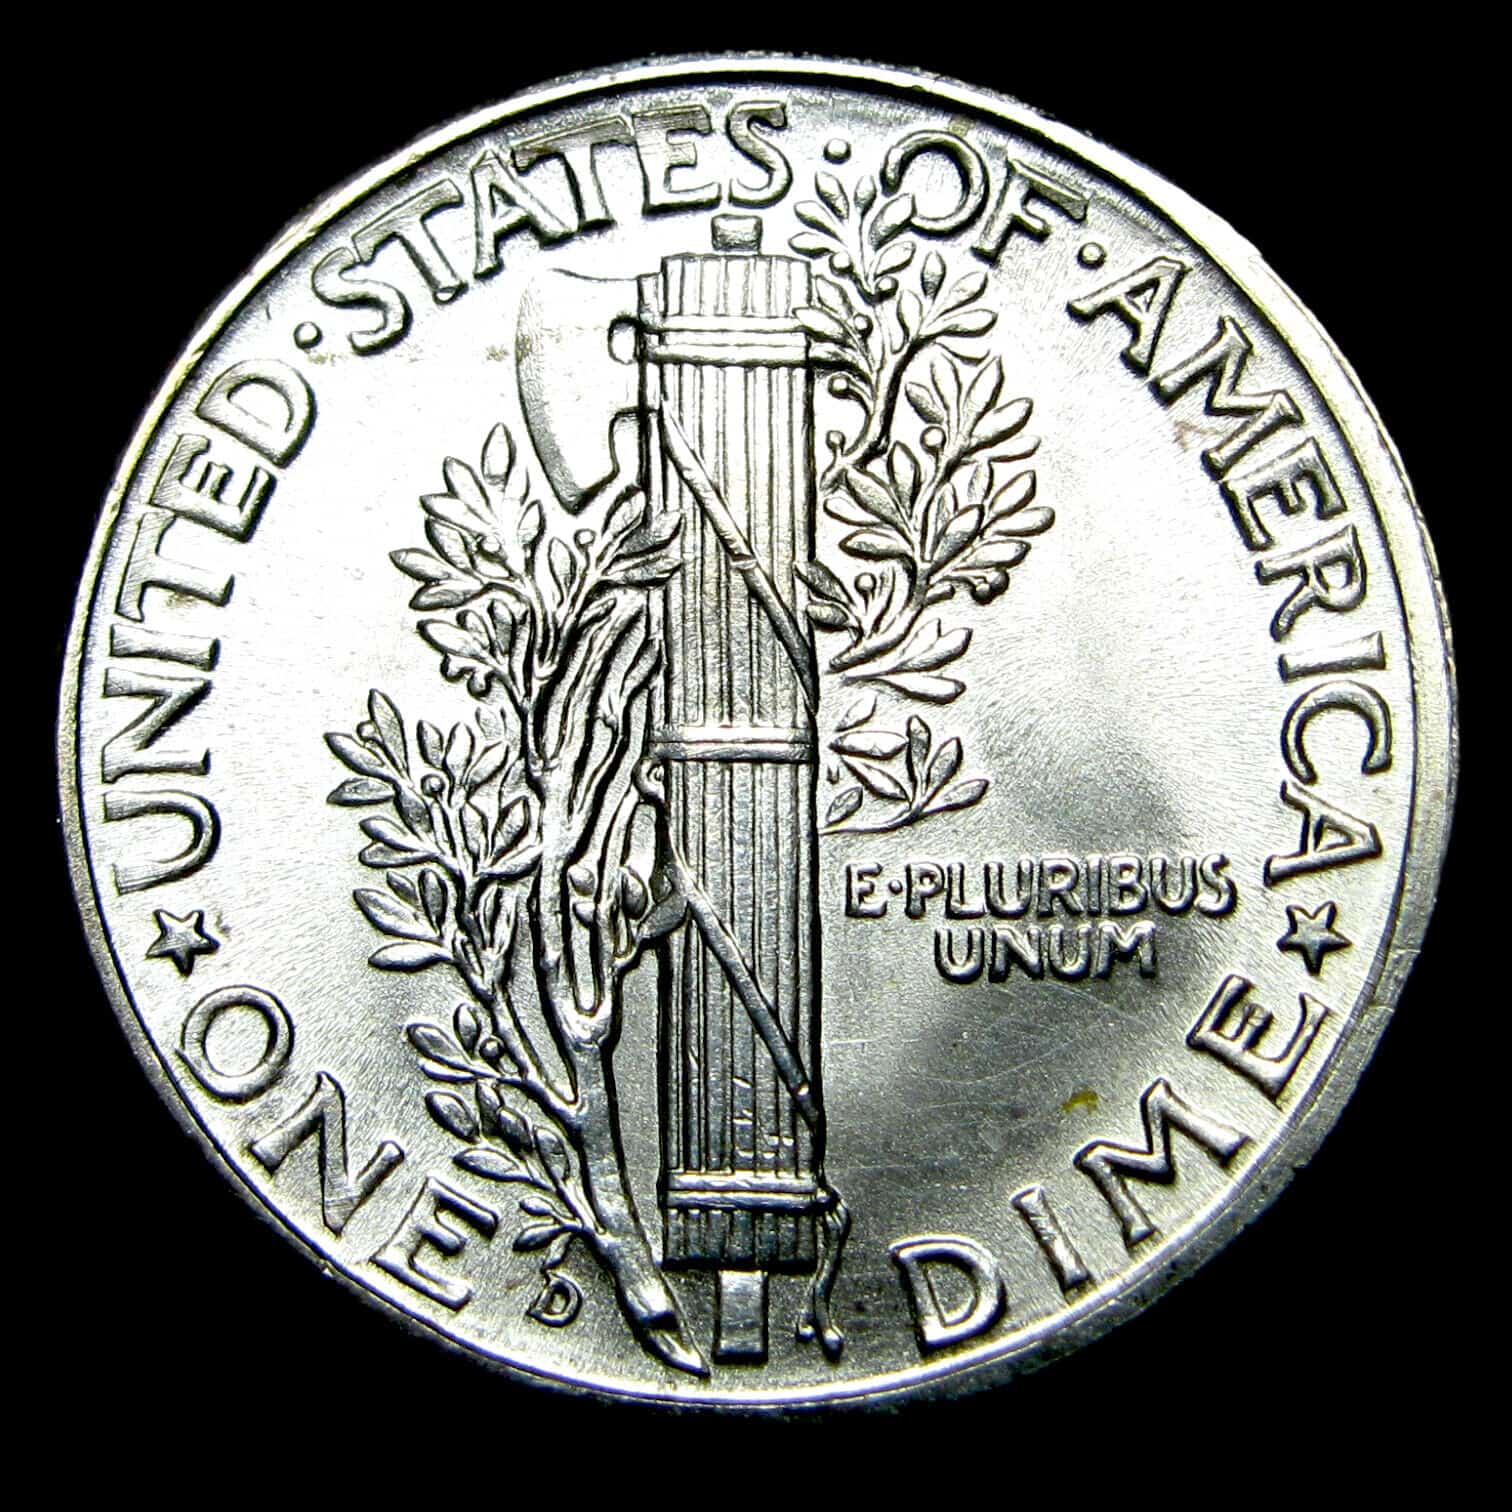 1939 Dime Value for “D” Mint Mark